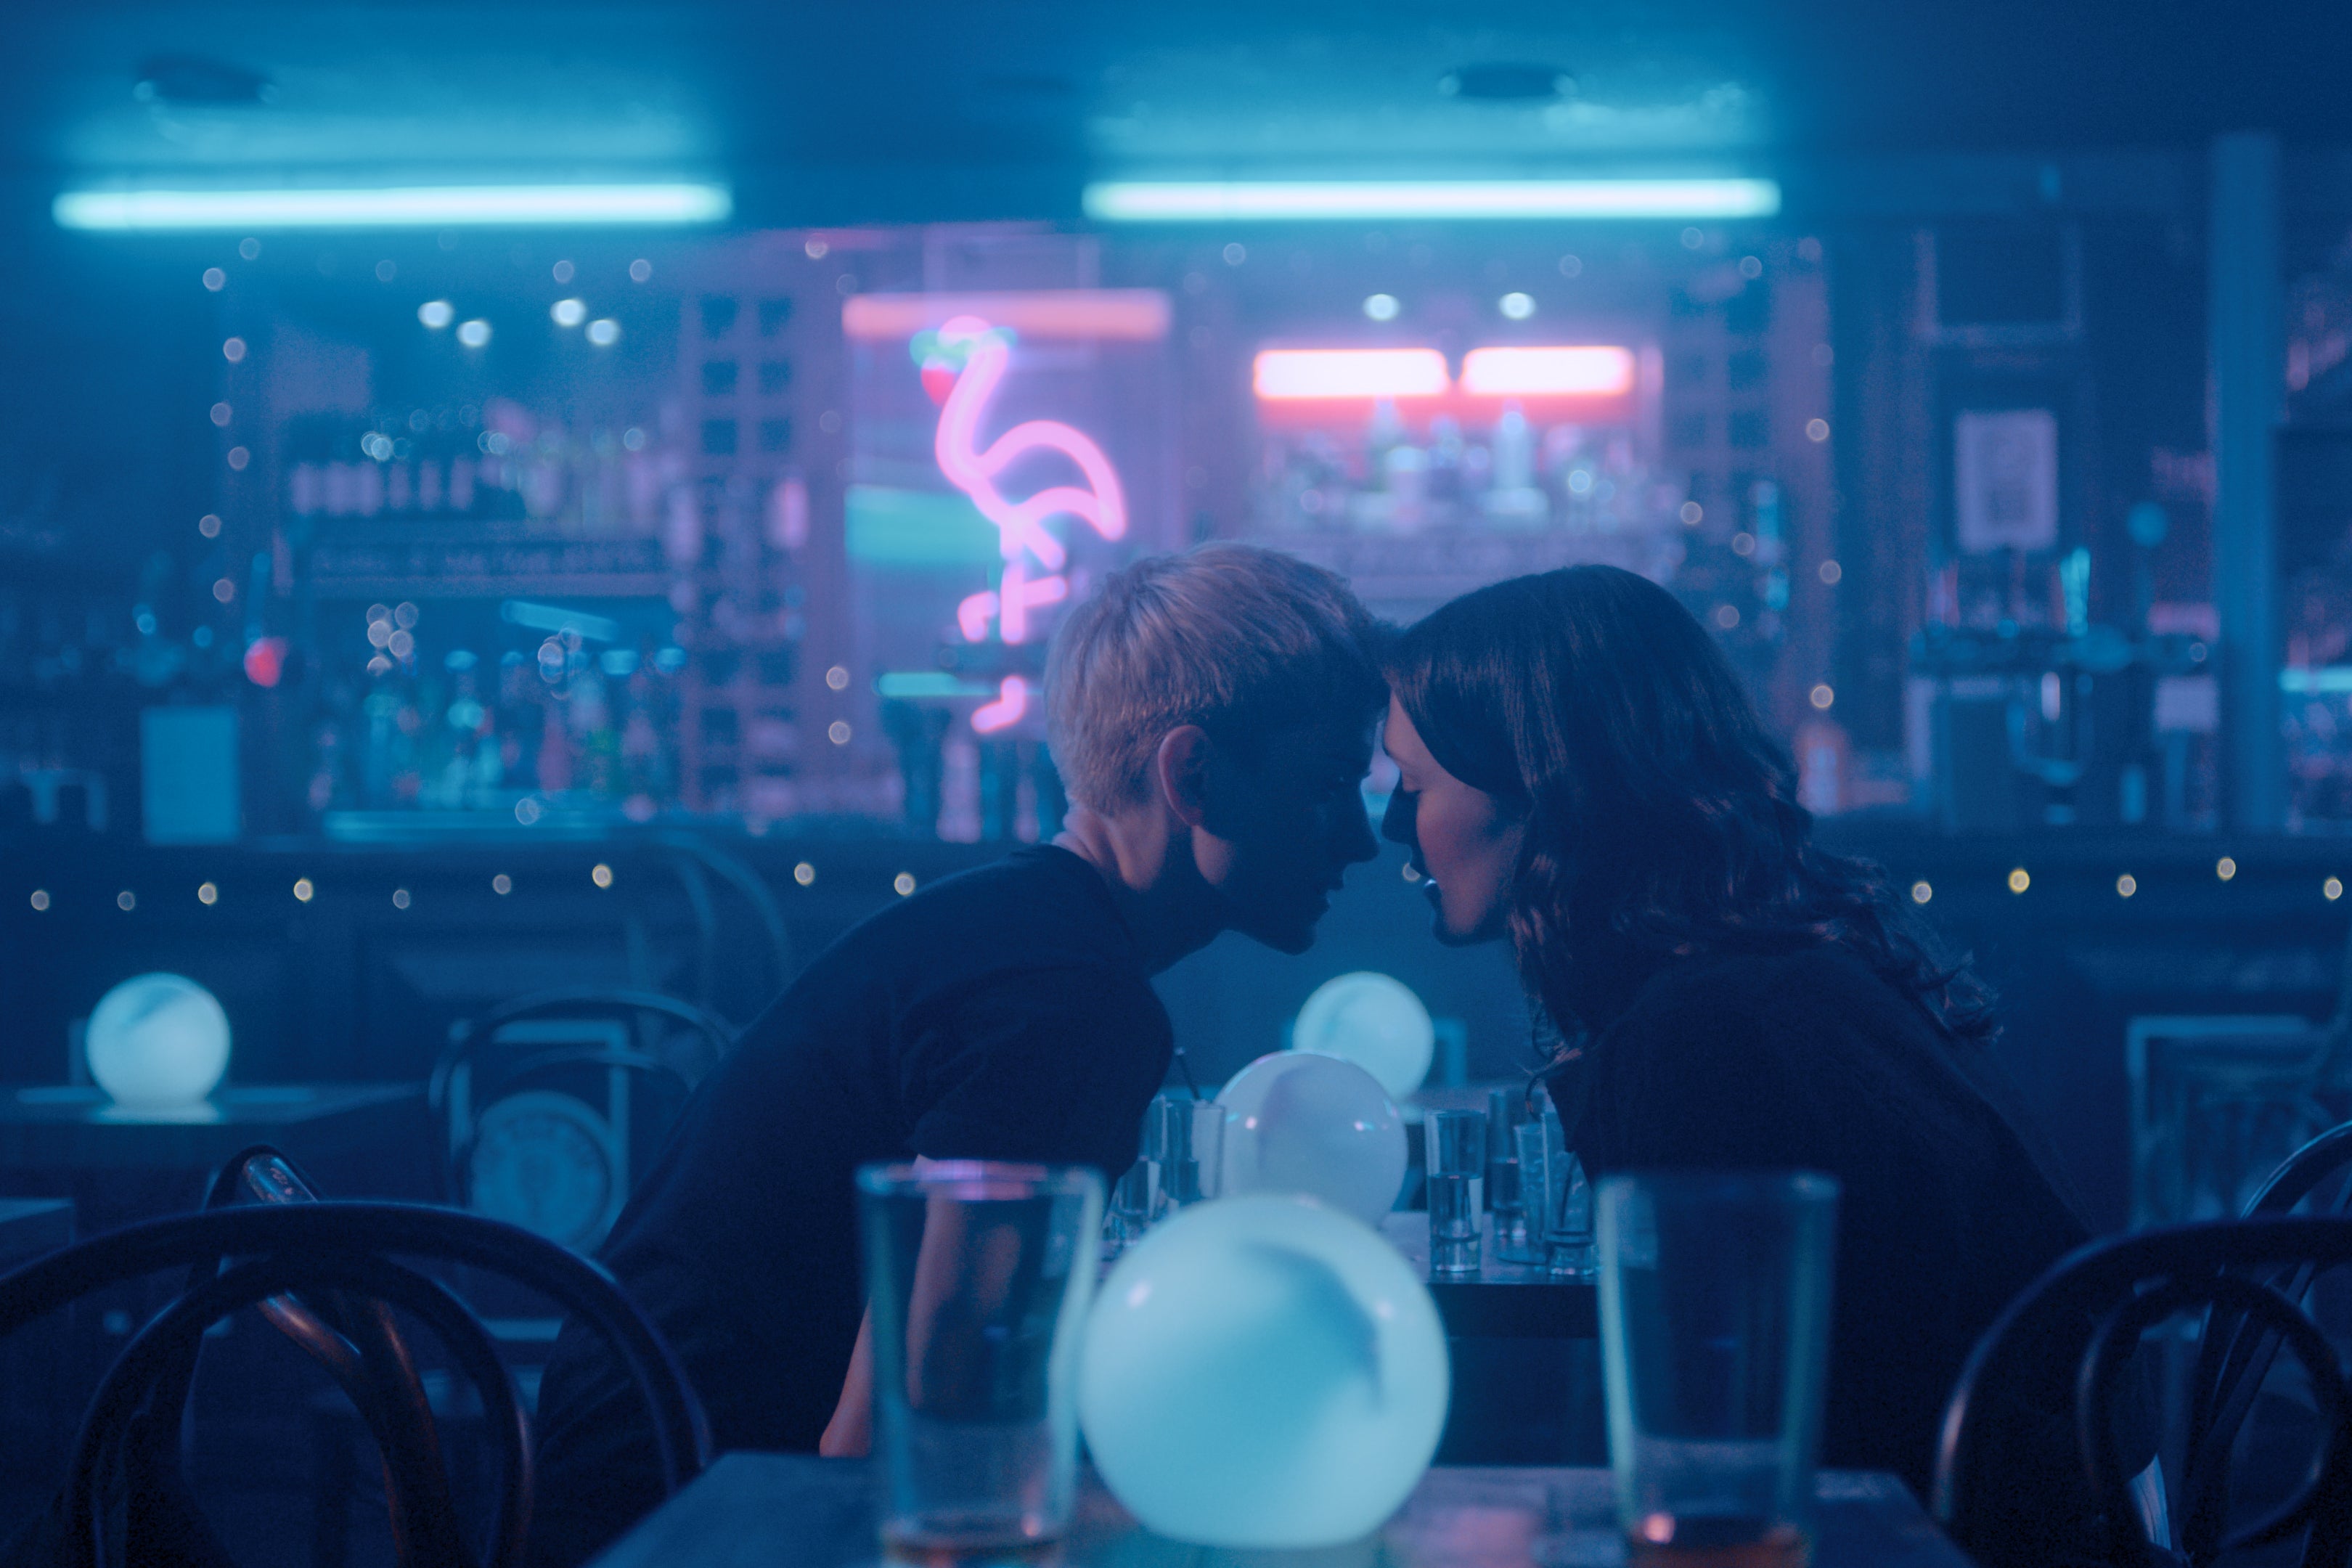 Two women lean in to kiss in a dark bar